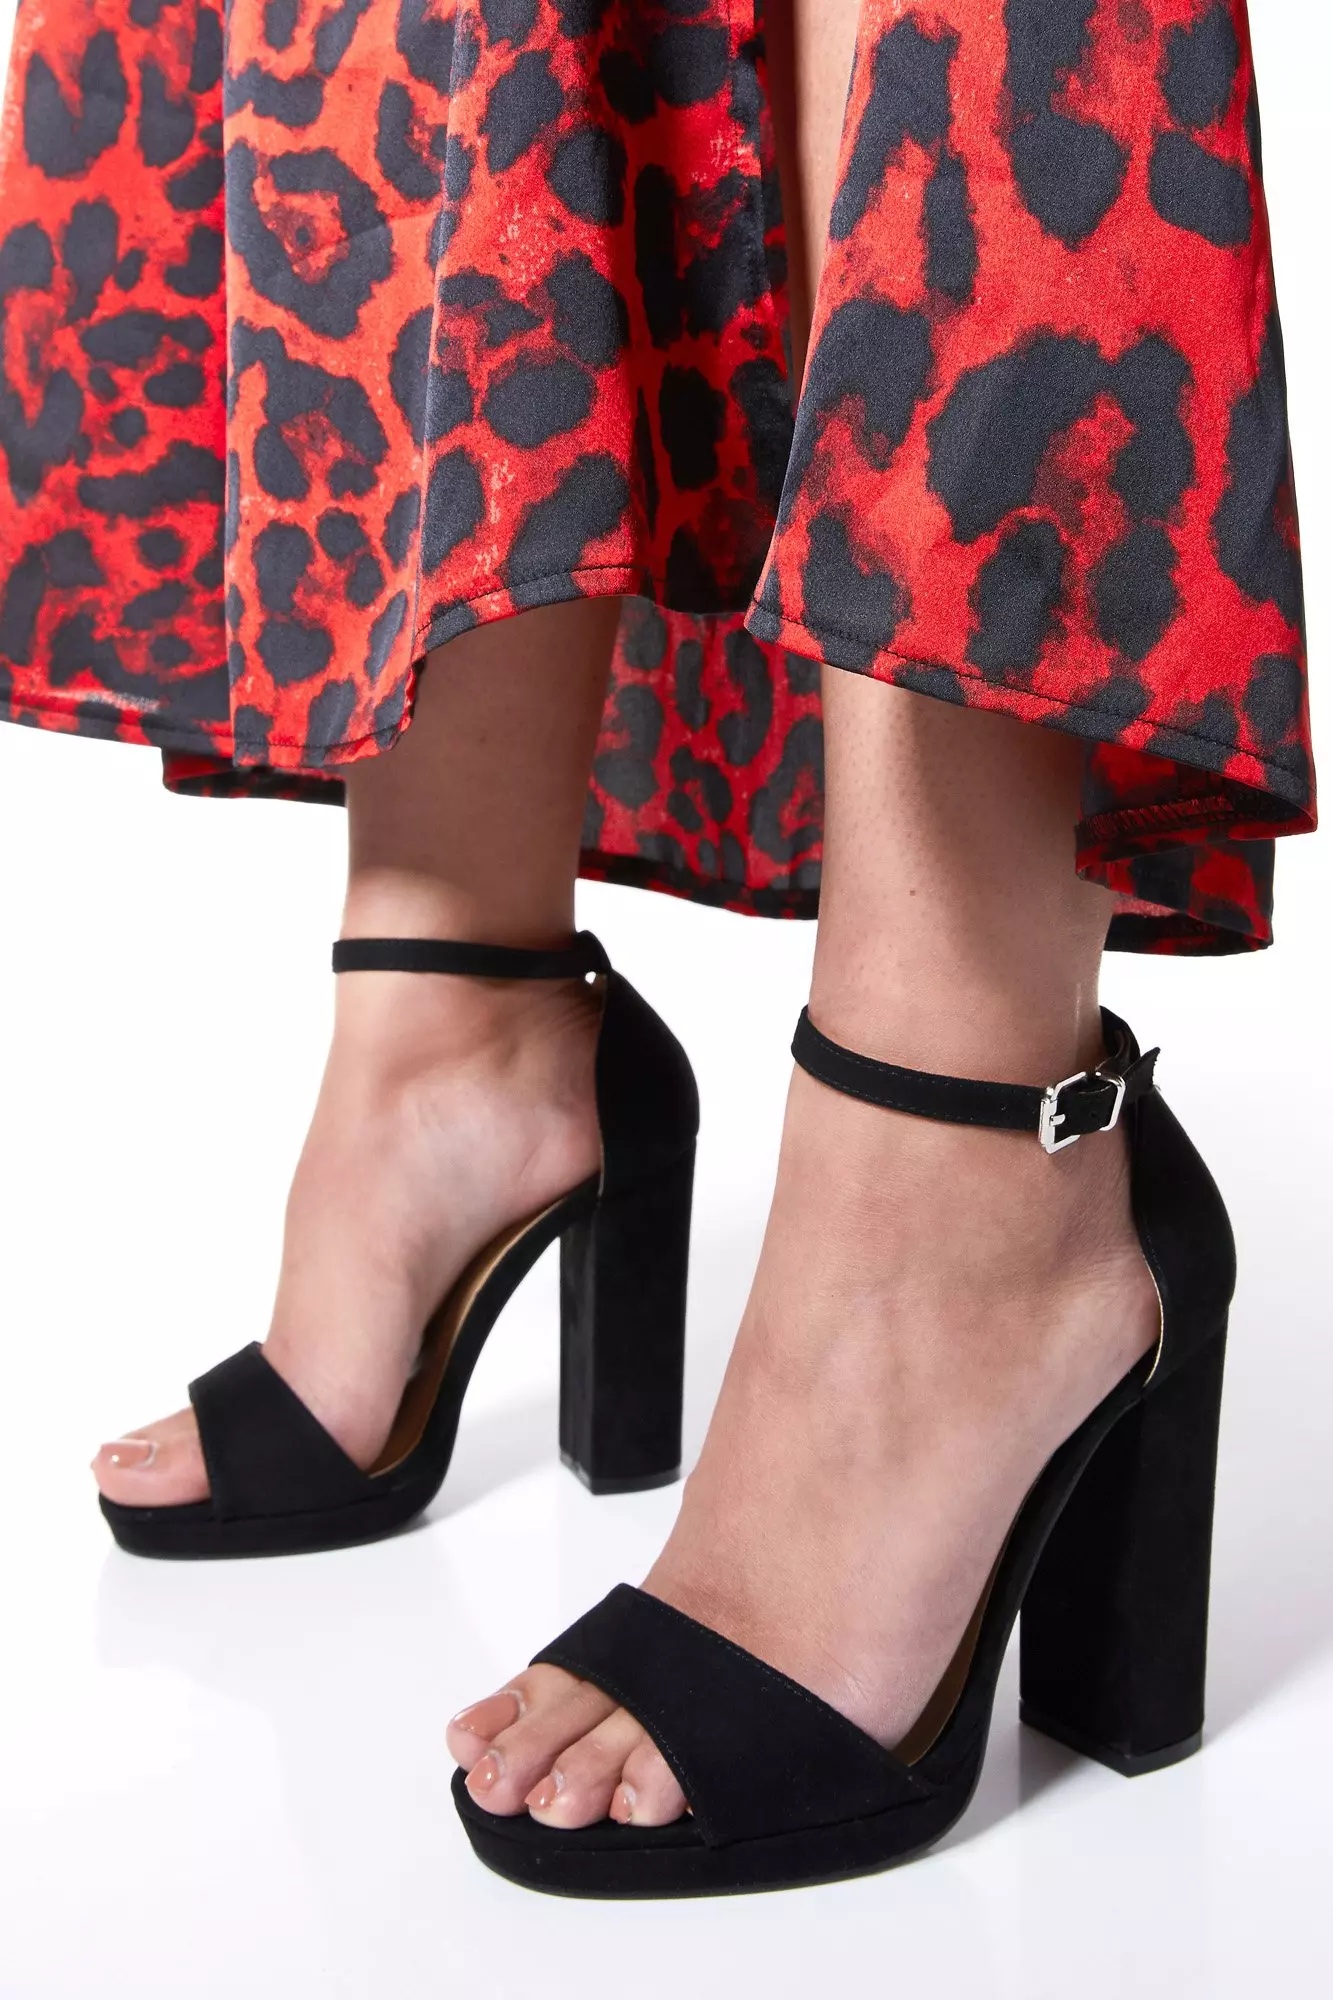 quiz black heels